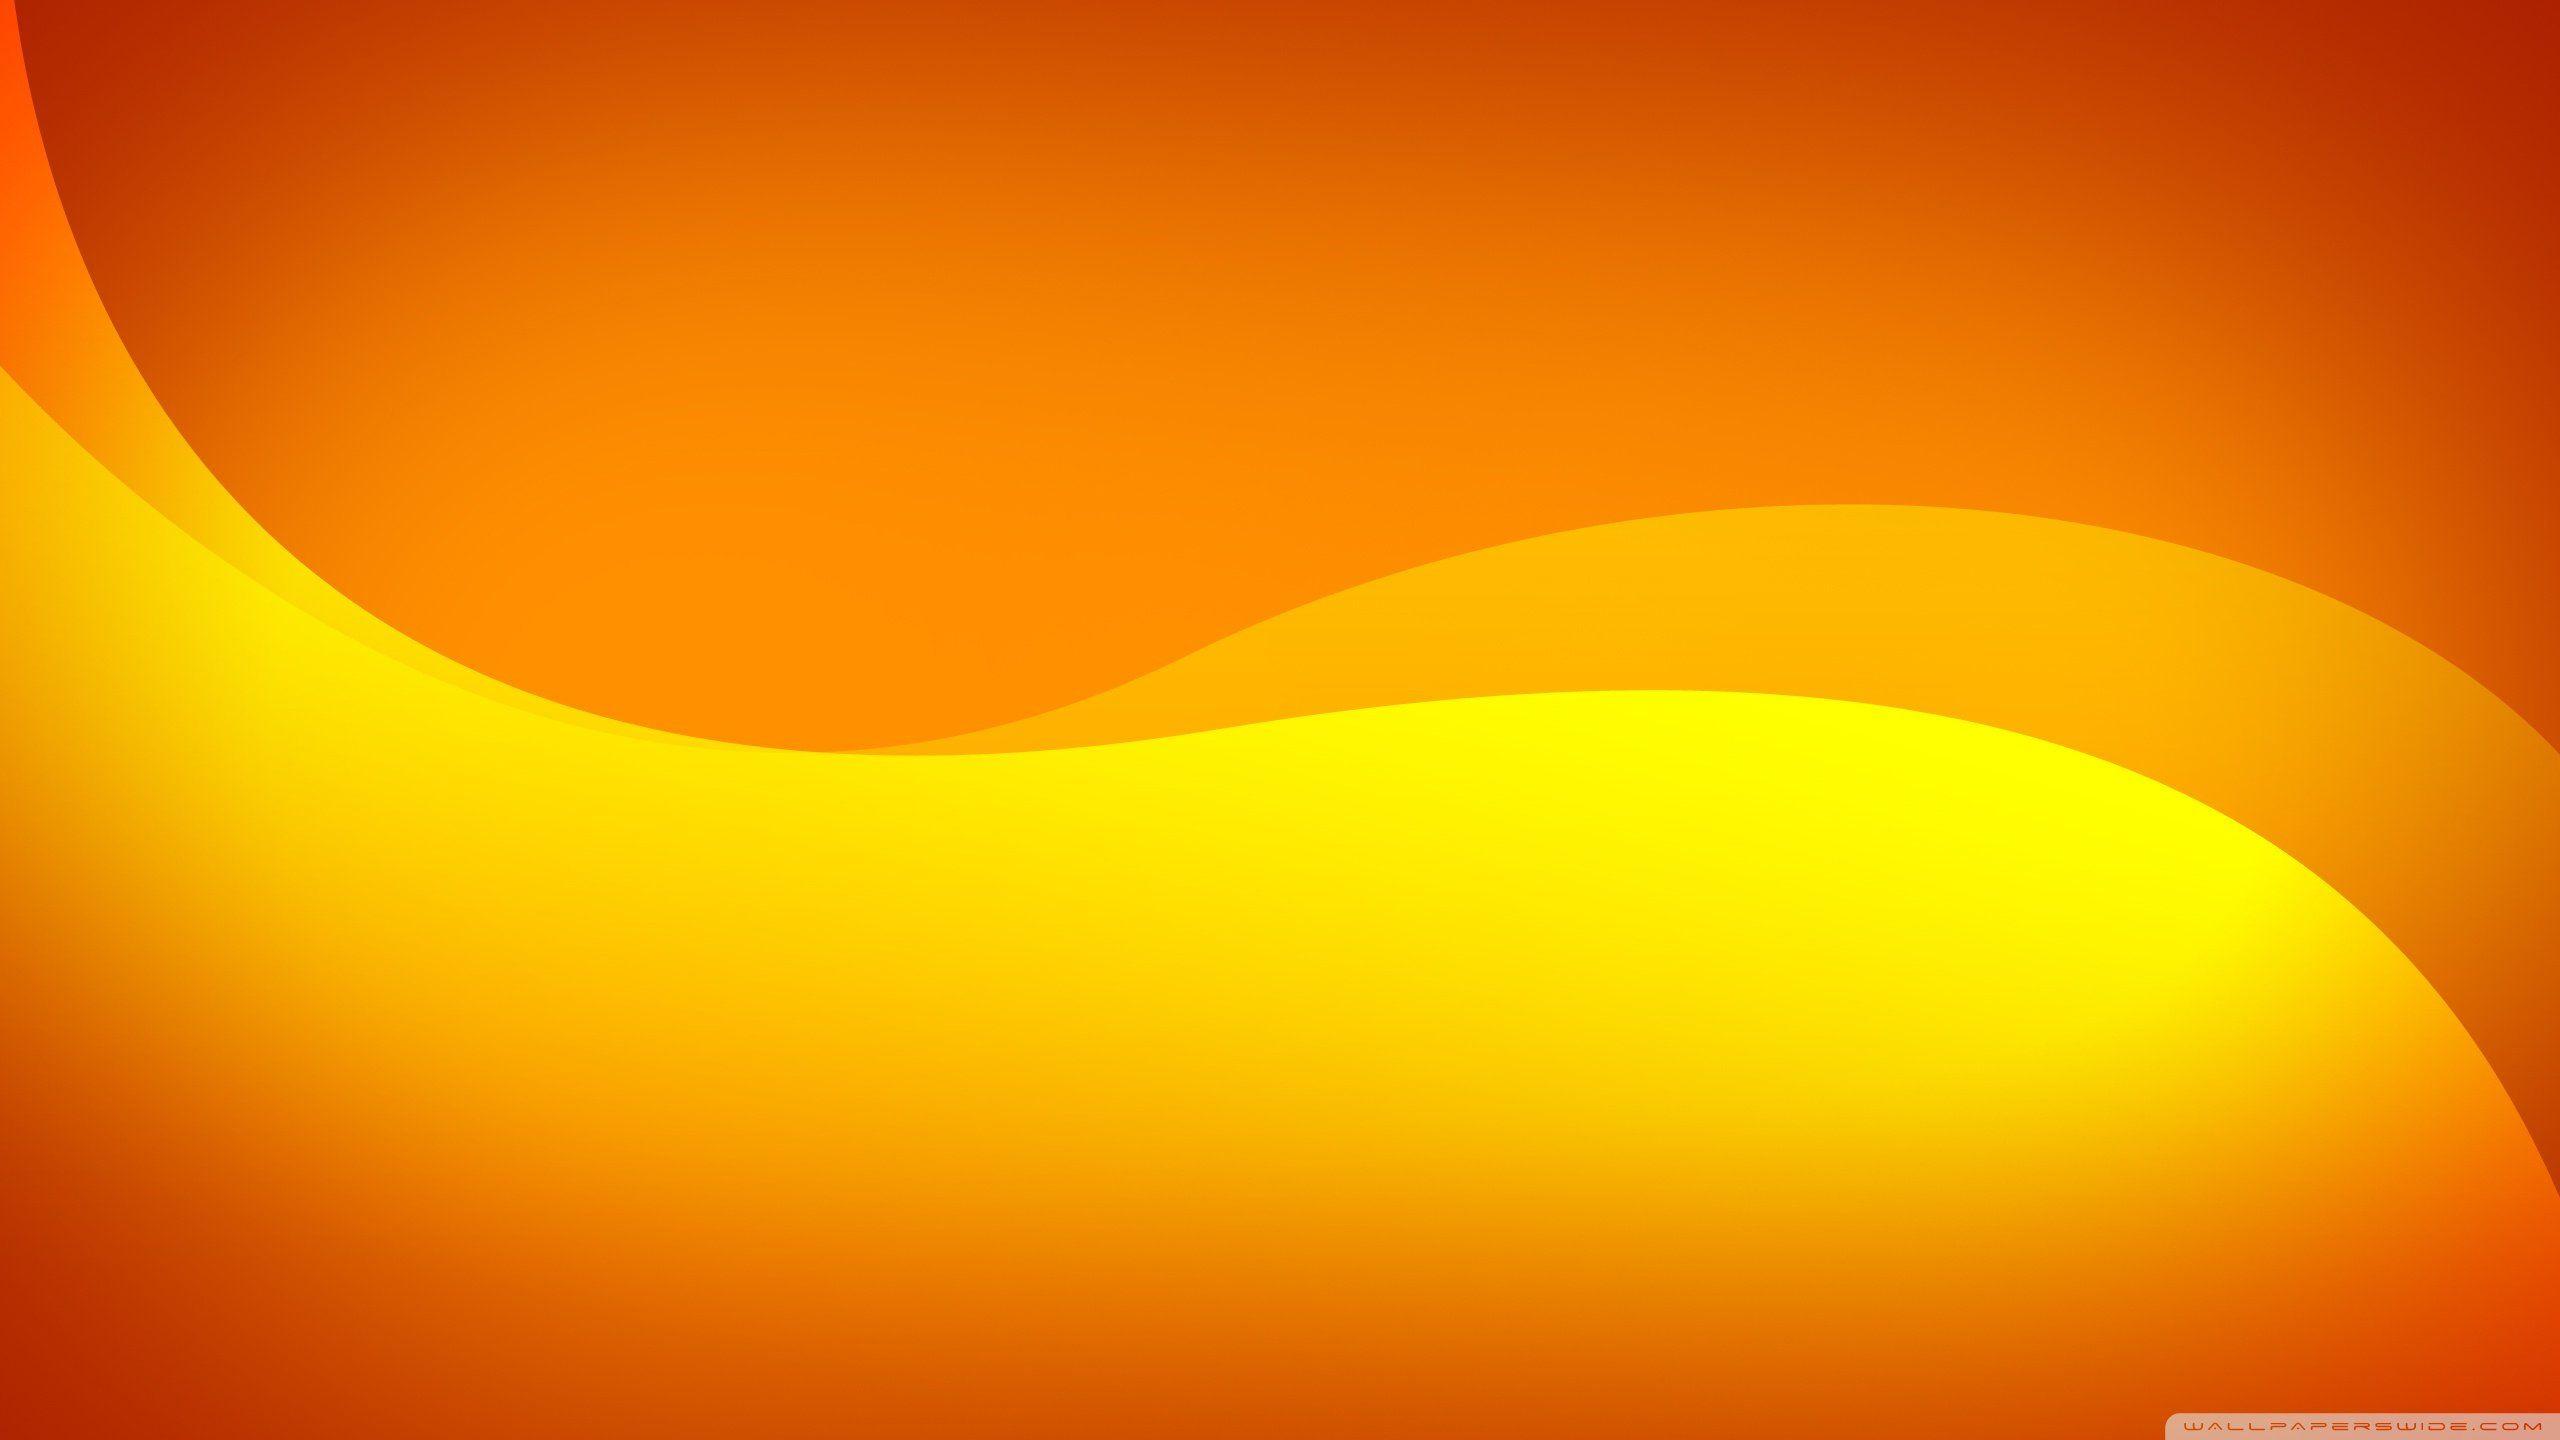  Orange  Backgrounds  Wallpaper Cave